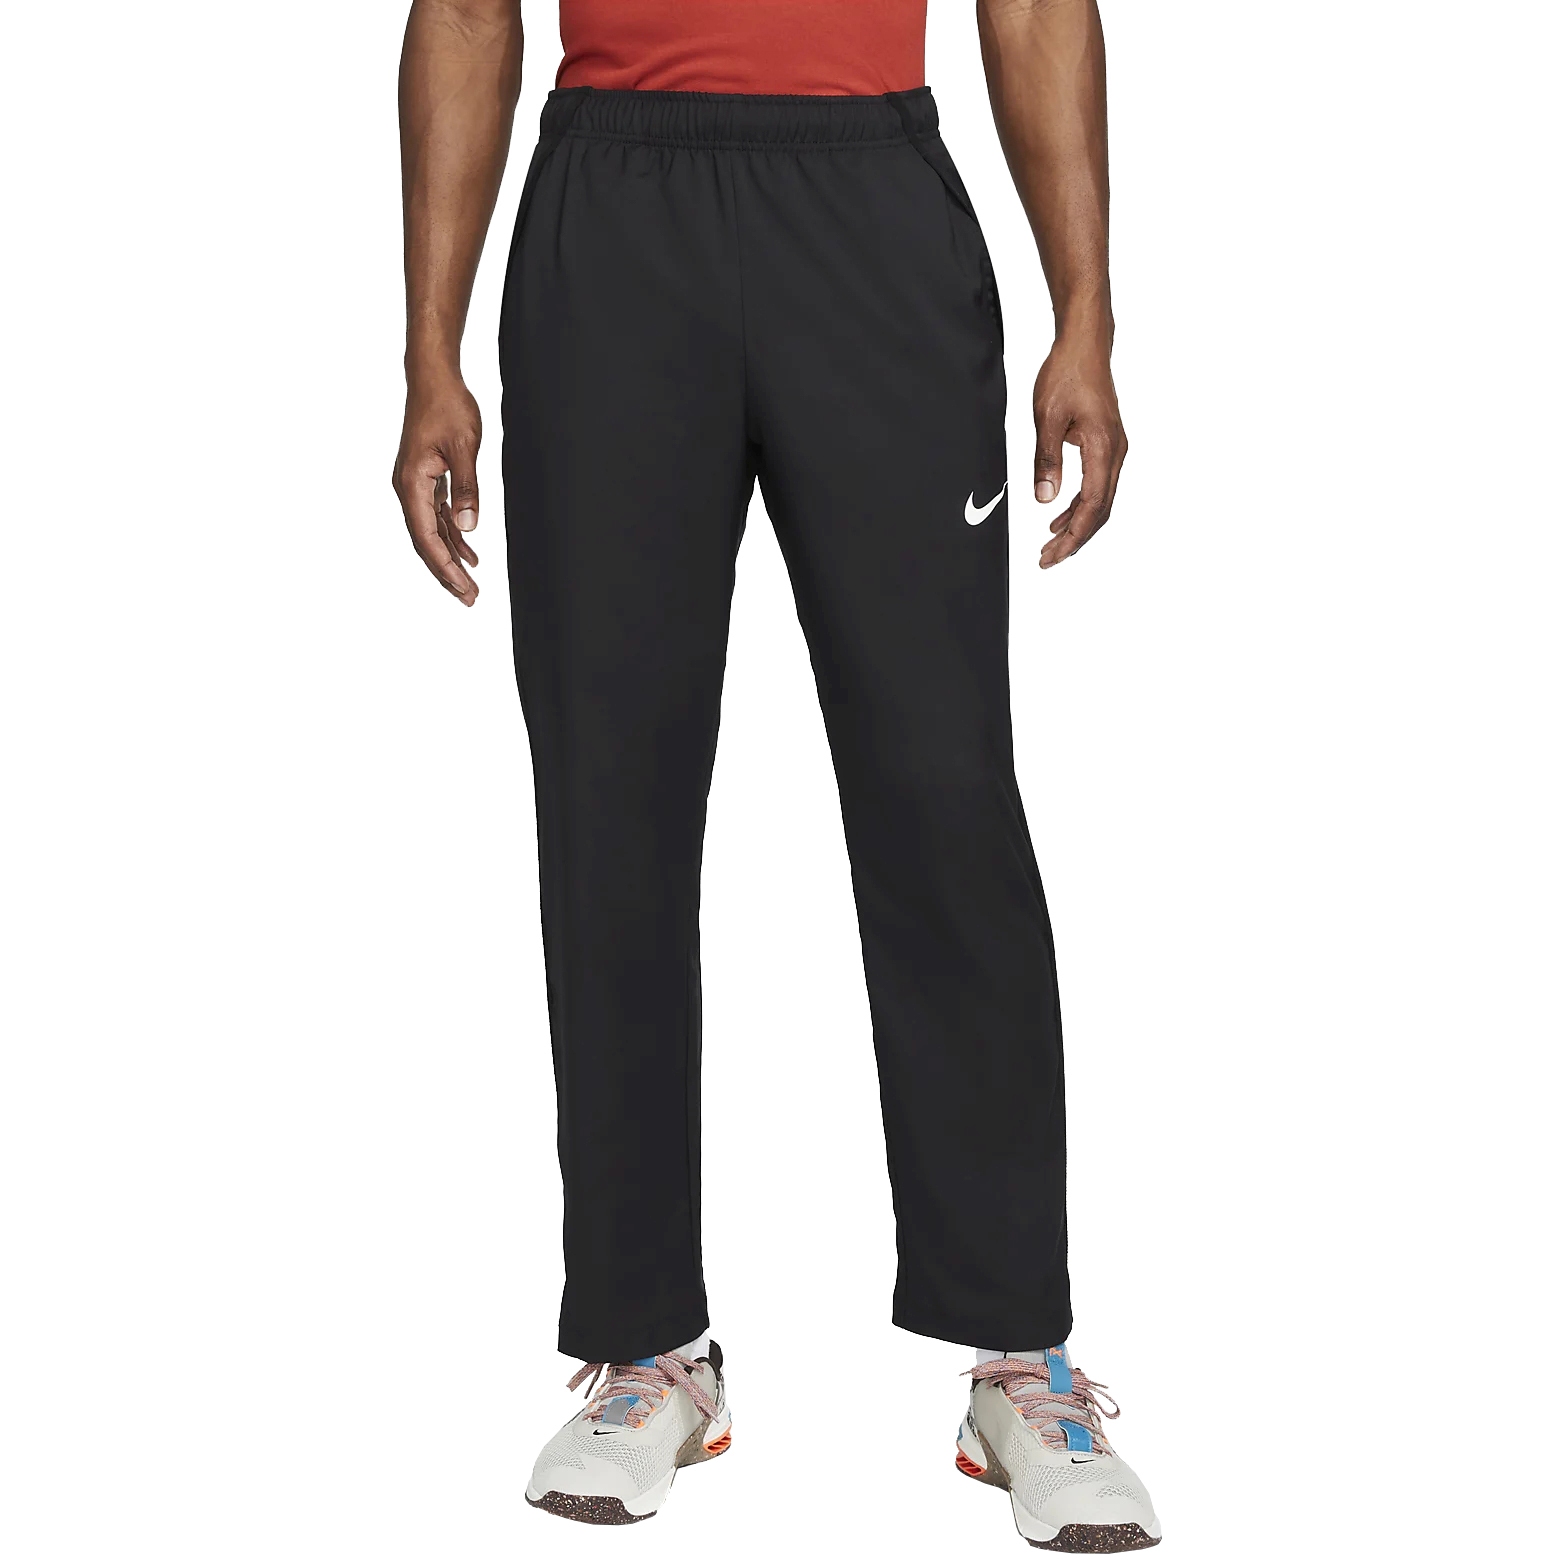 Immagine di Nike Pantaloni da Jogging Uomo - Dri-FIT Team - black/black/white DM6626-010